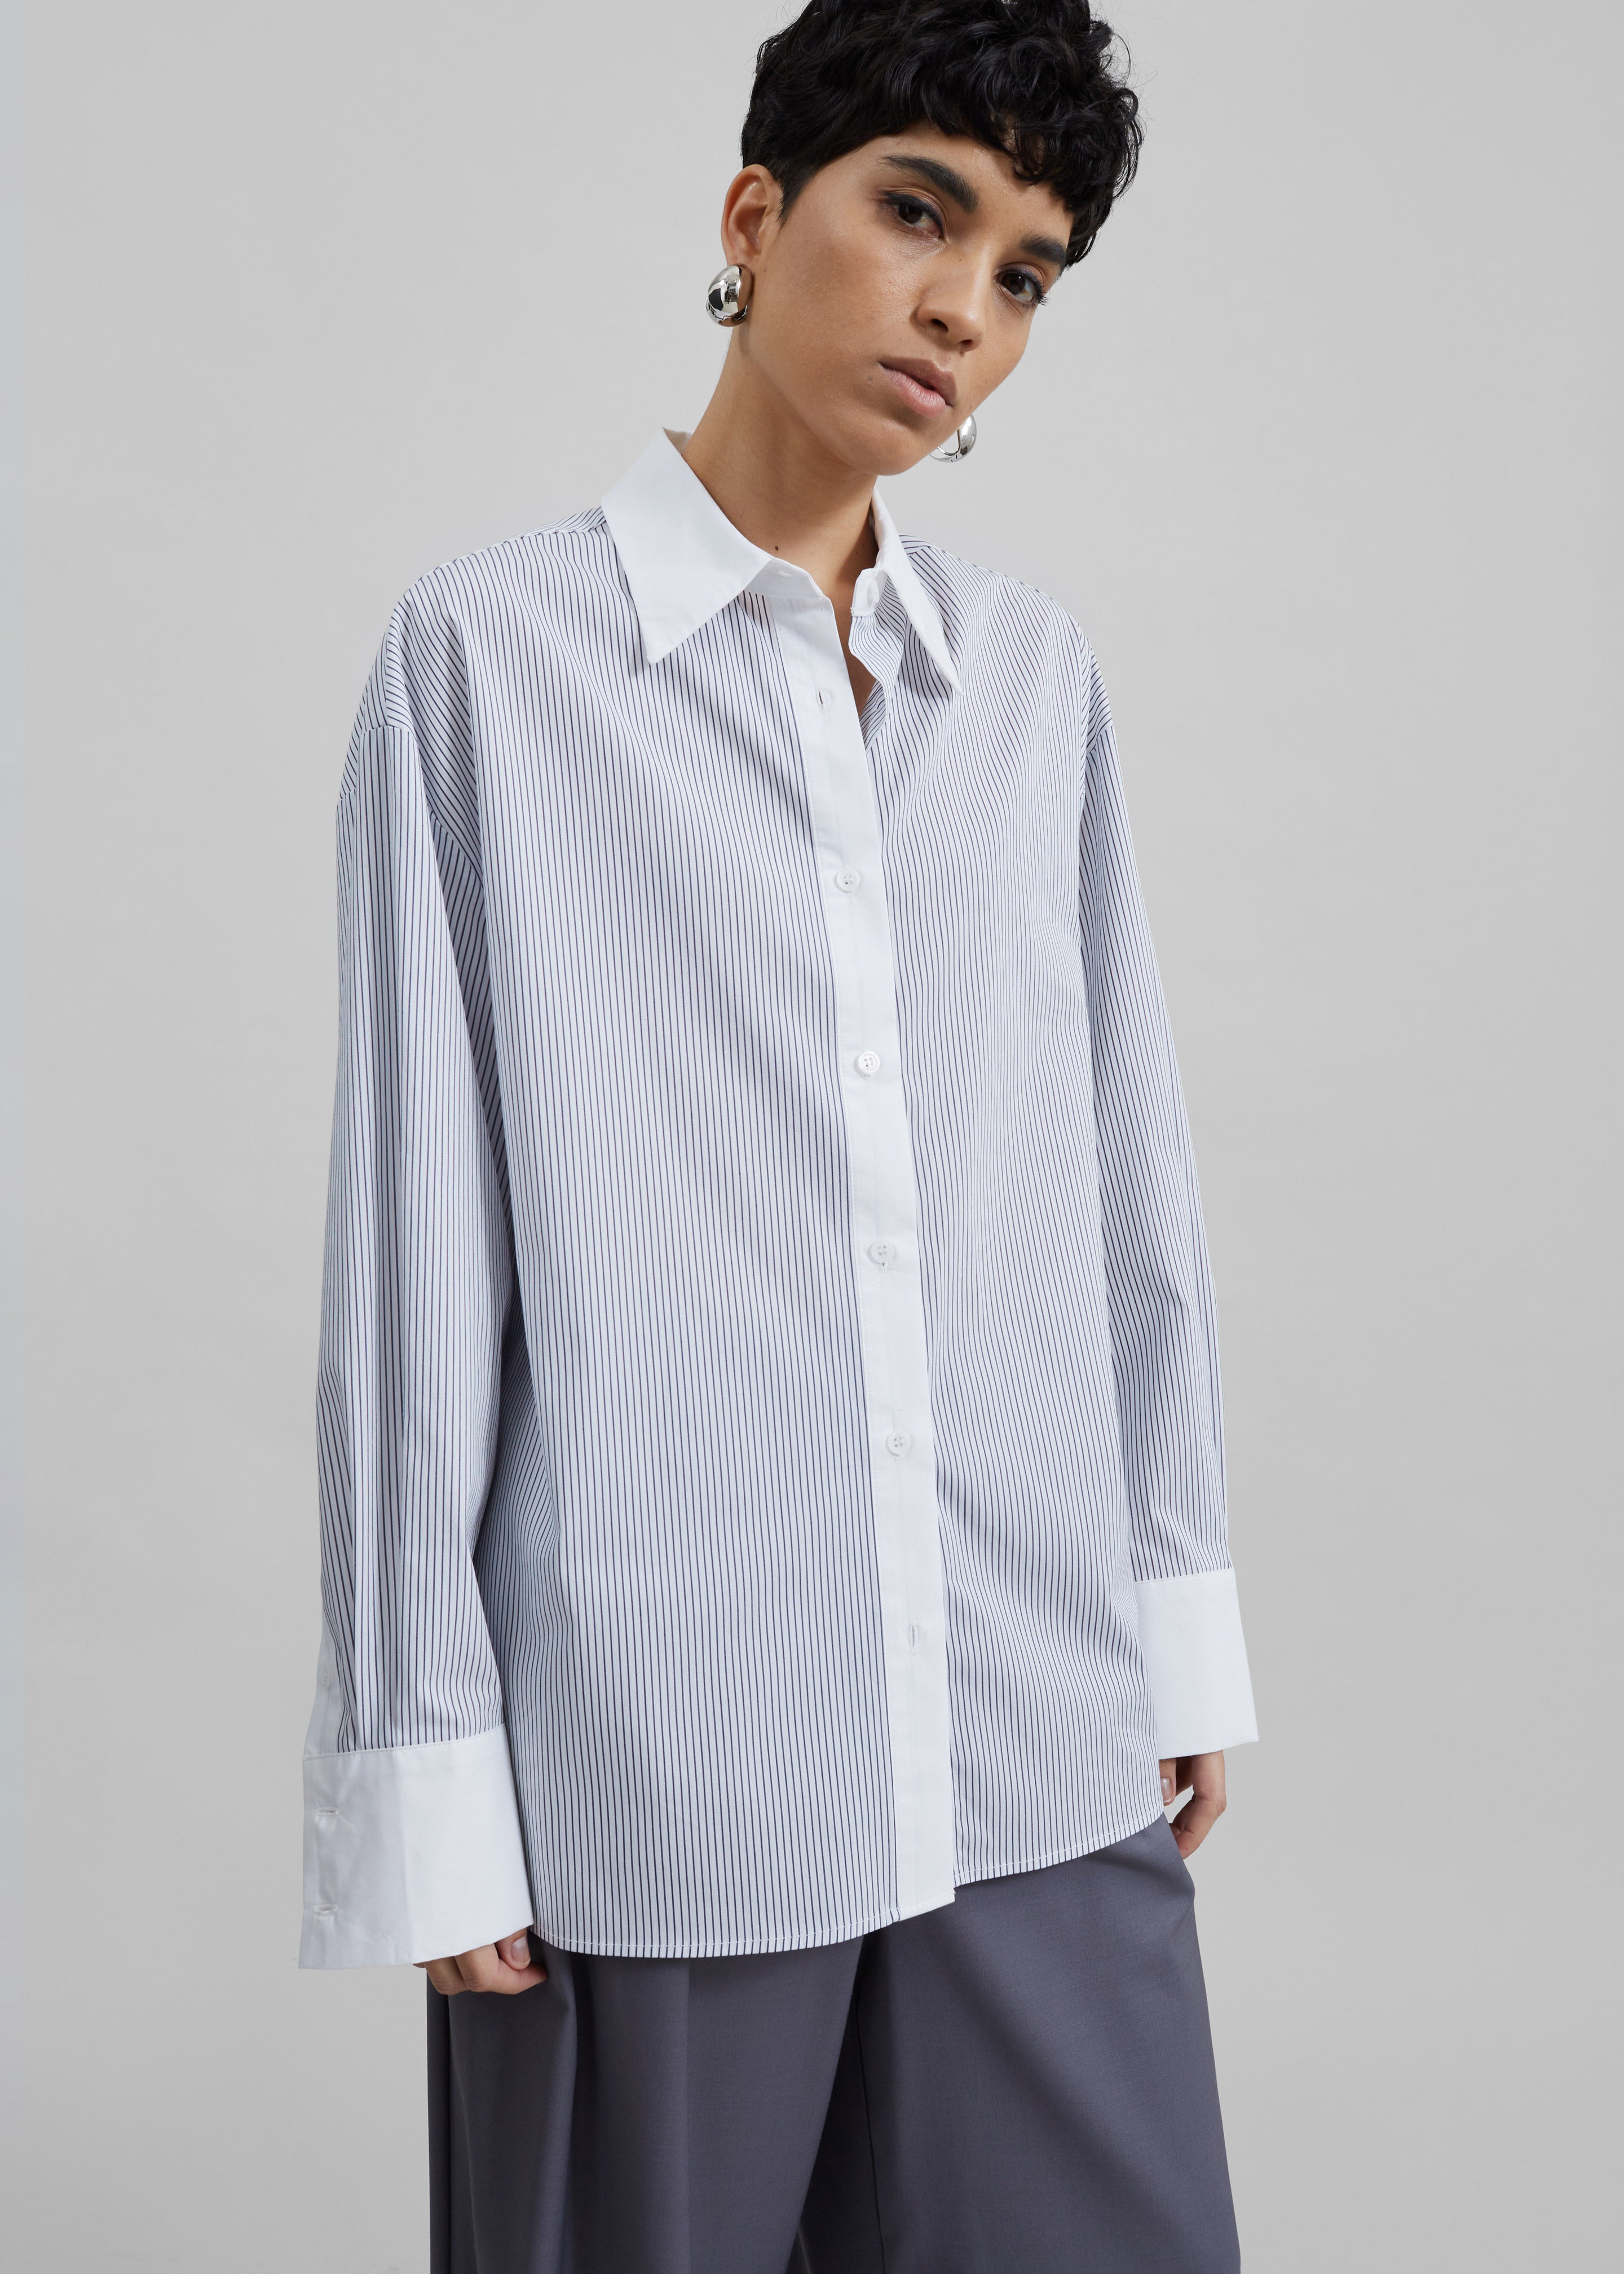 Nerina Button Up Shirt - Black/White Stripe - 5